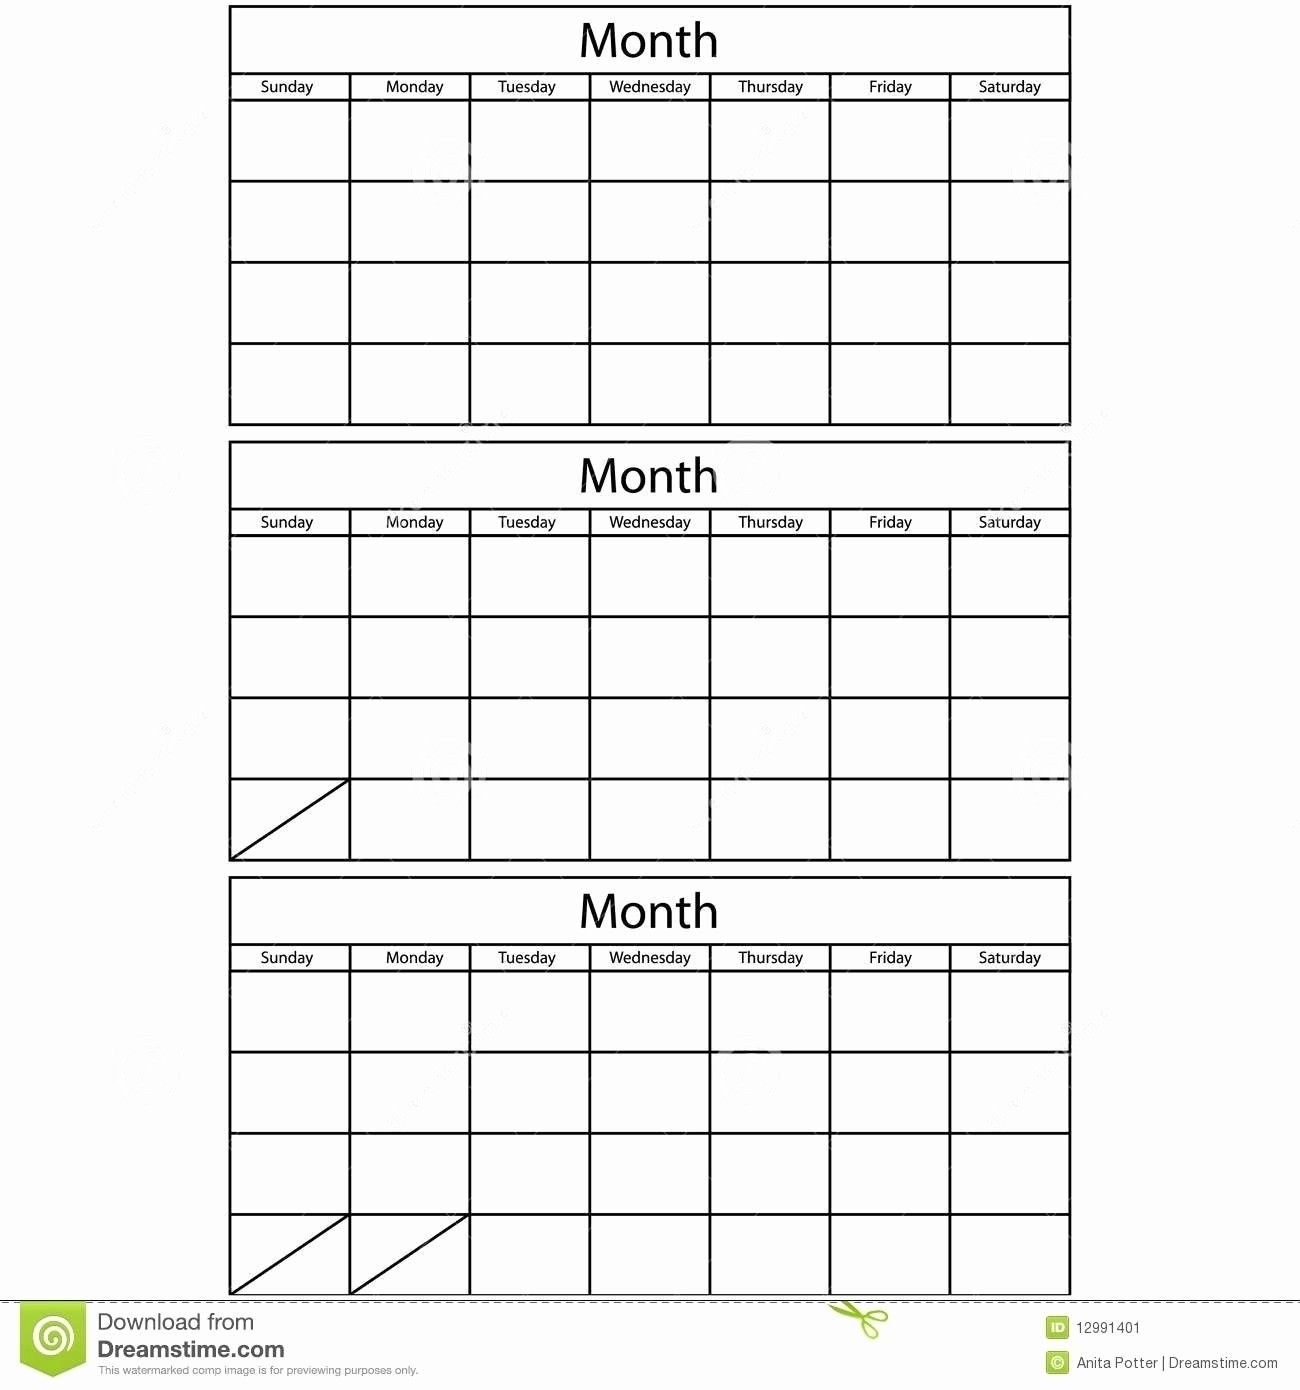 Free 3 Month Calendar Templates - Calendar Inspiration Design  Free Printable 3 Month Calendar Template